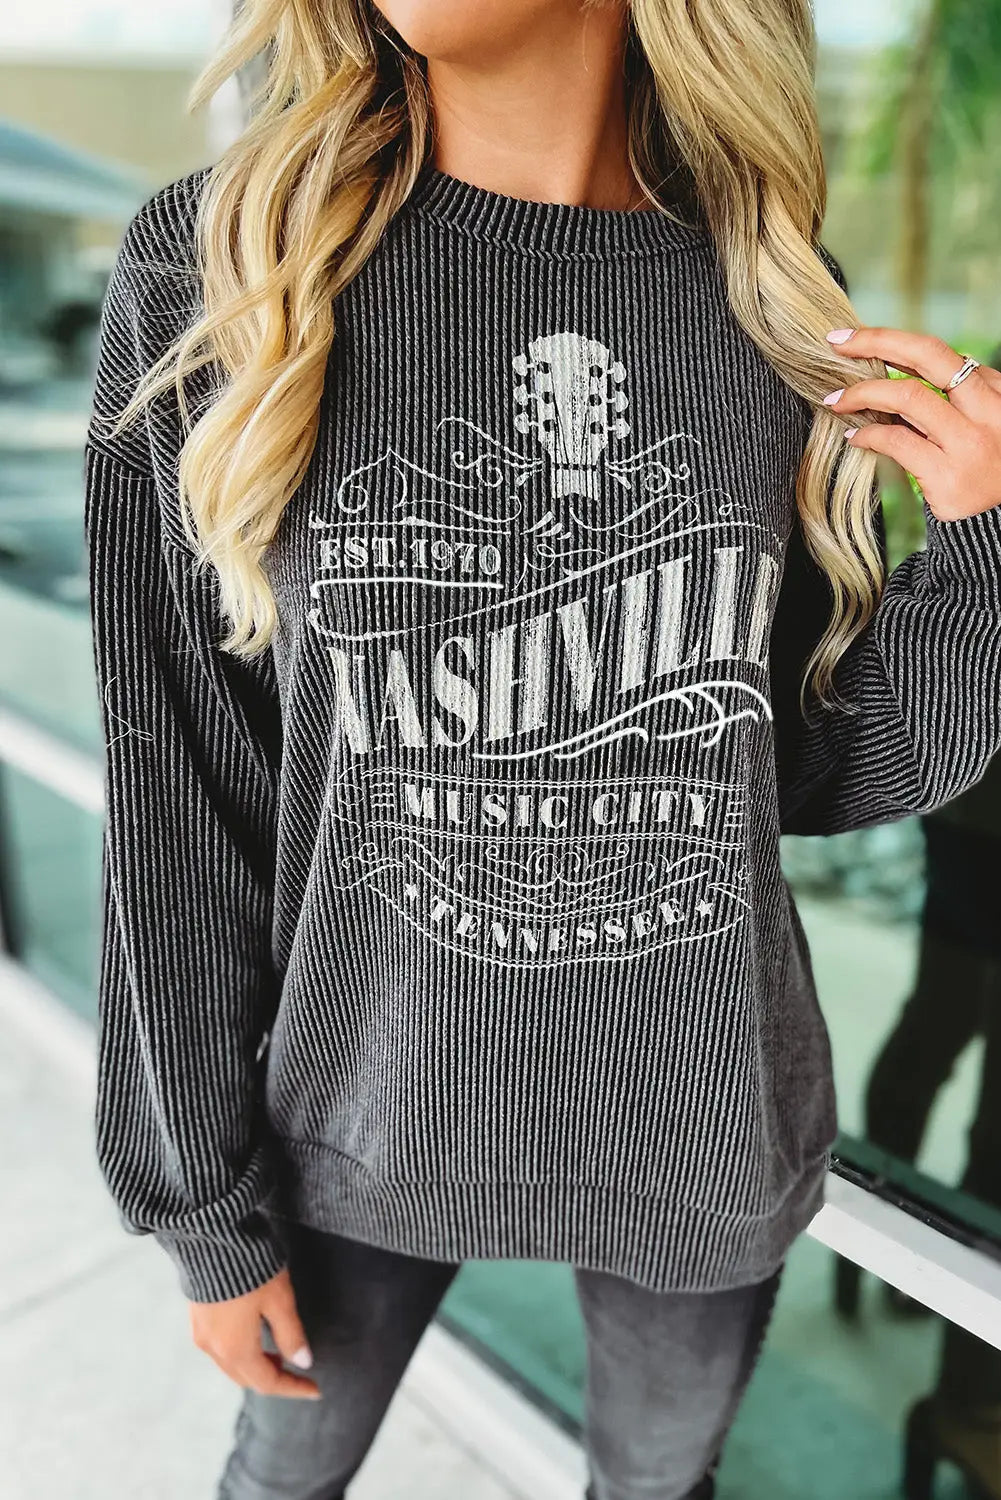 Black nashville music city corded graphic sweatshirt - s / 75% polyester + 20% viscose + 5% elastane - tops